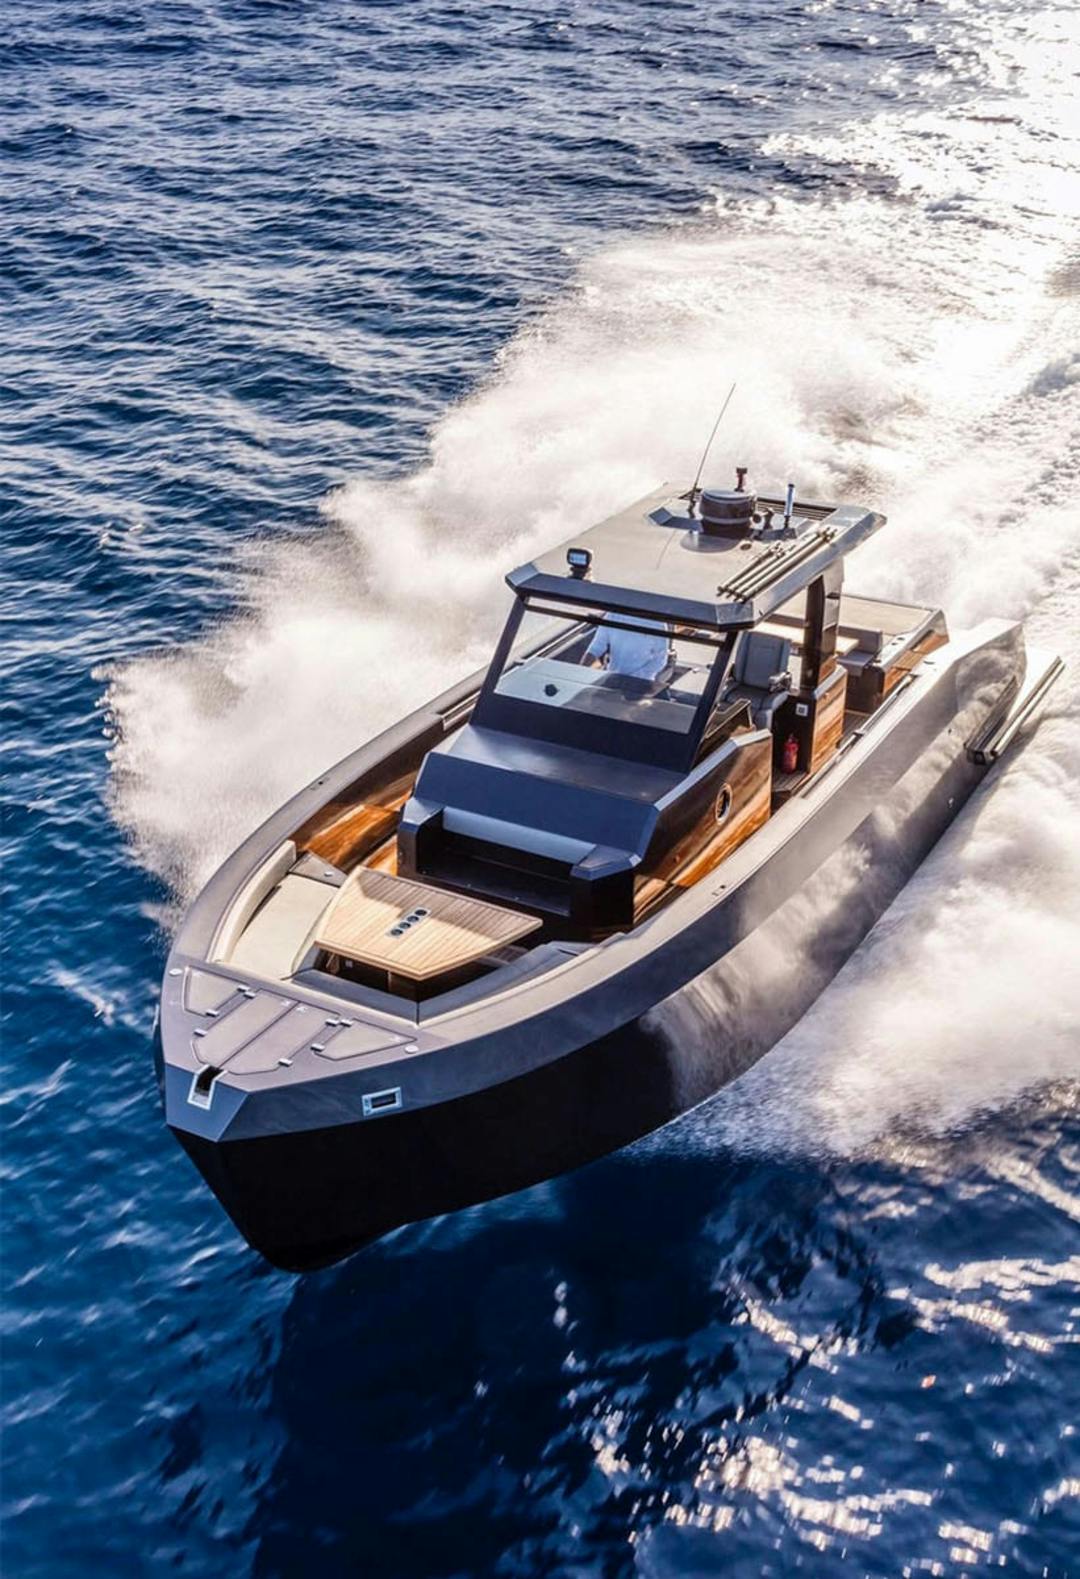 42' Mazu luxury charter yacht - Monaco - 2